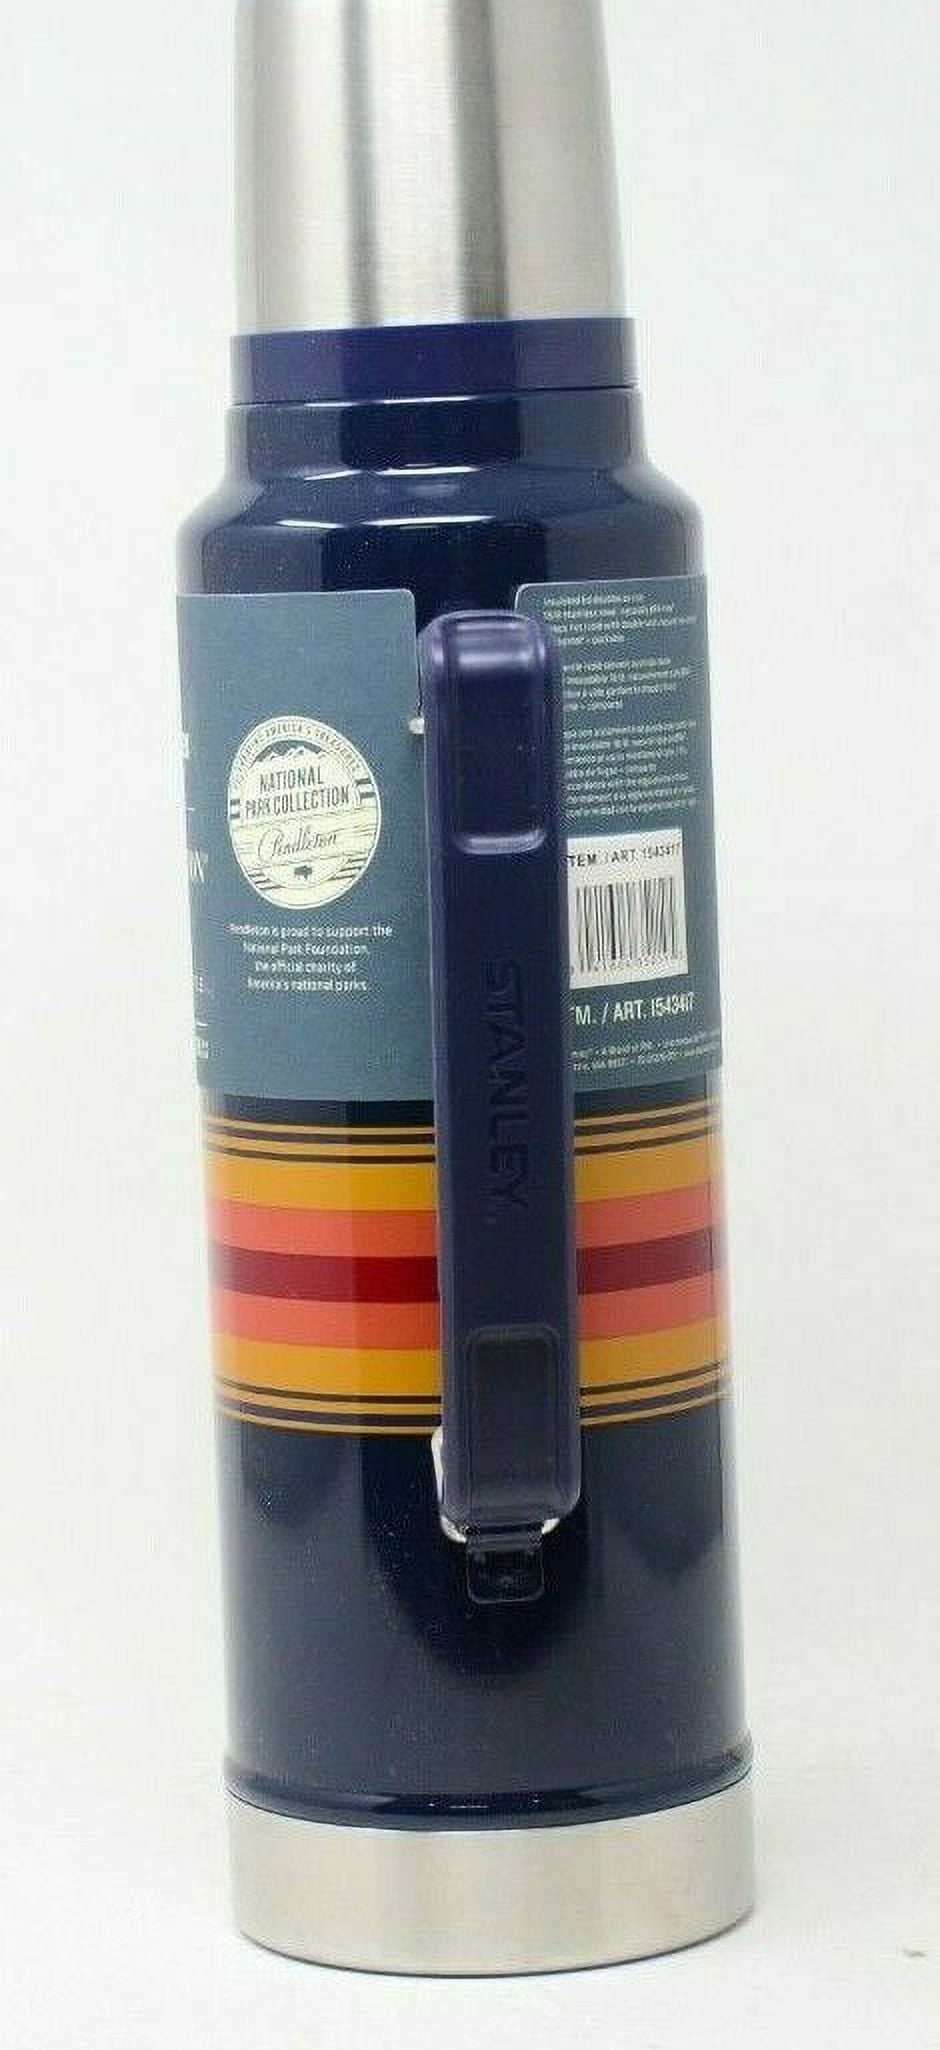 Pendleton Stanley Thermos Limited Edition National Parks Vacuum Bottle 1.5  QT